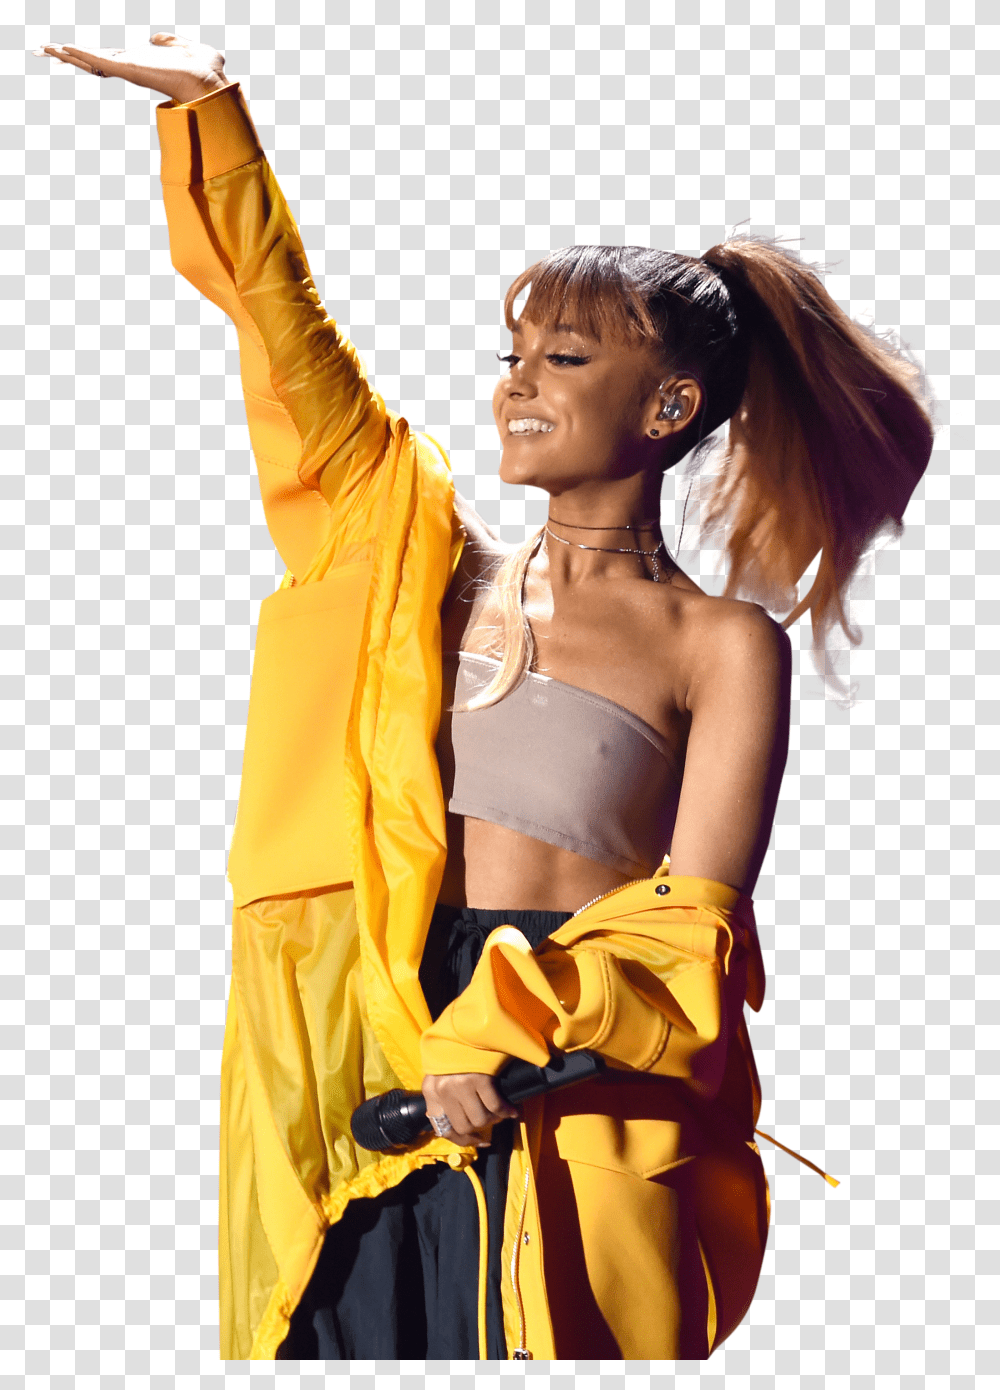 Ariana Grande In Yellow Dress Ariana Grande Transparent Png